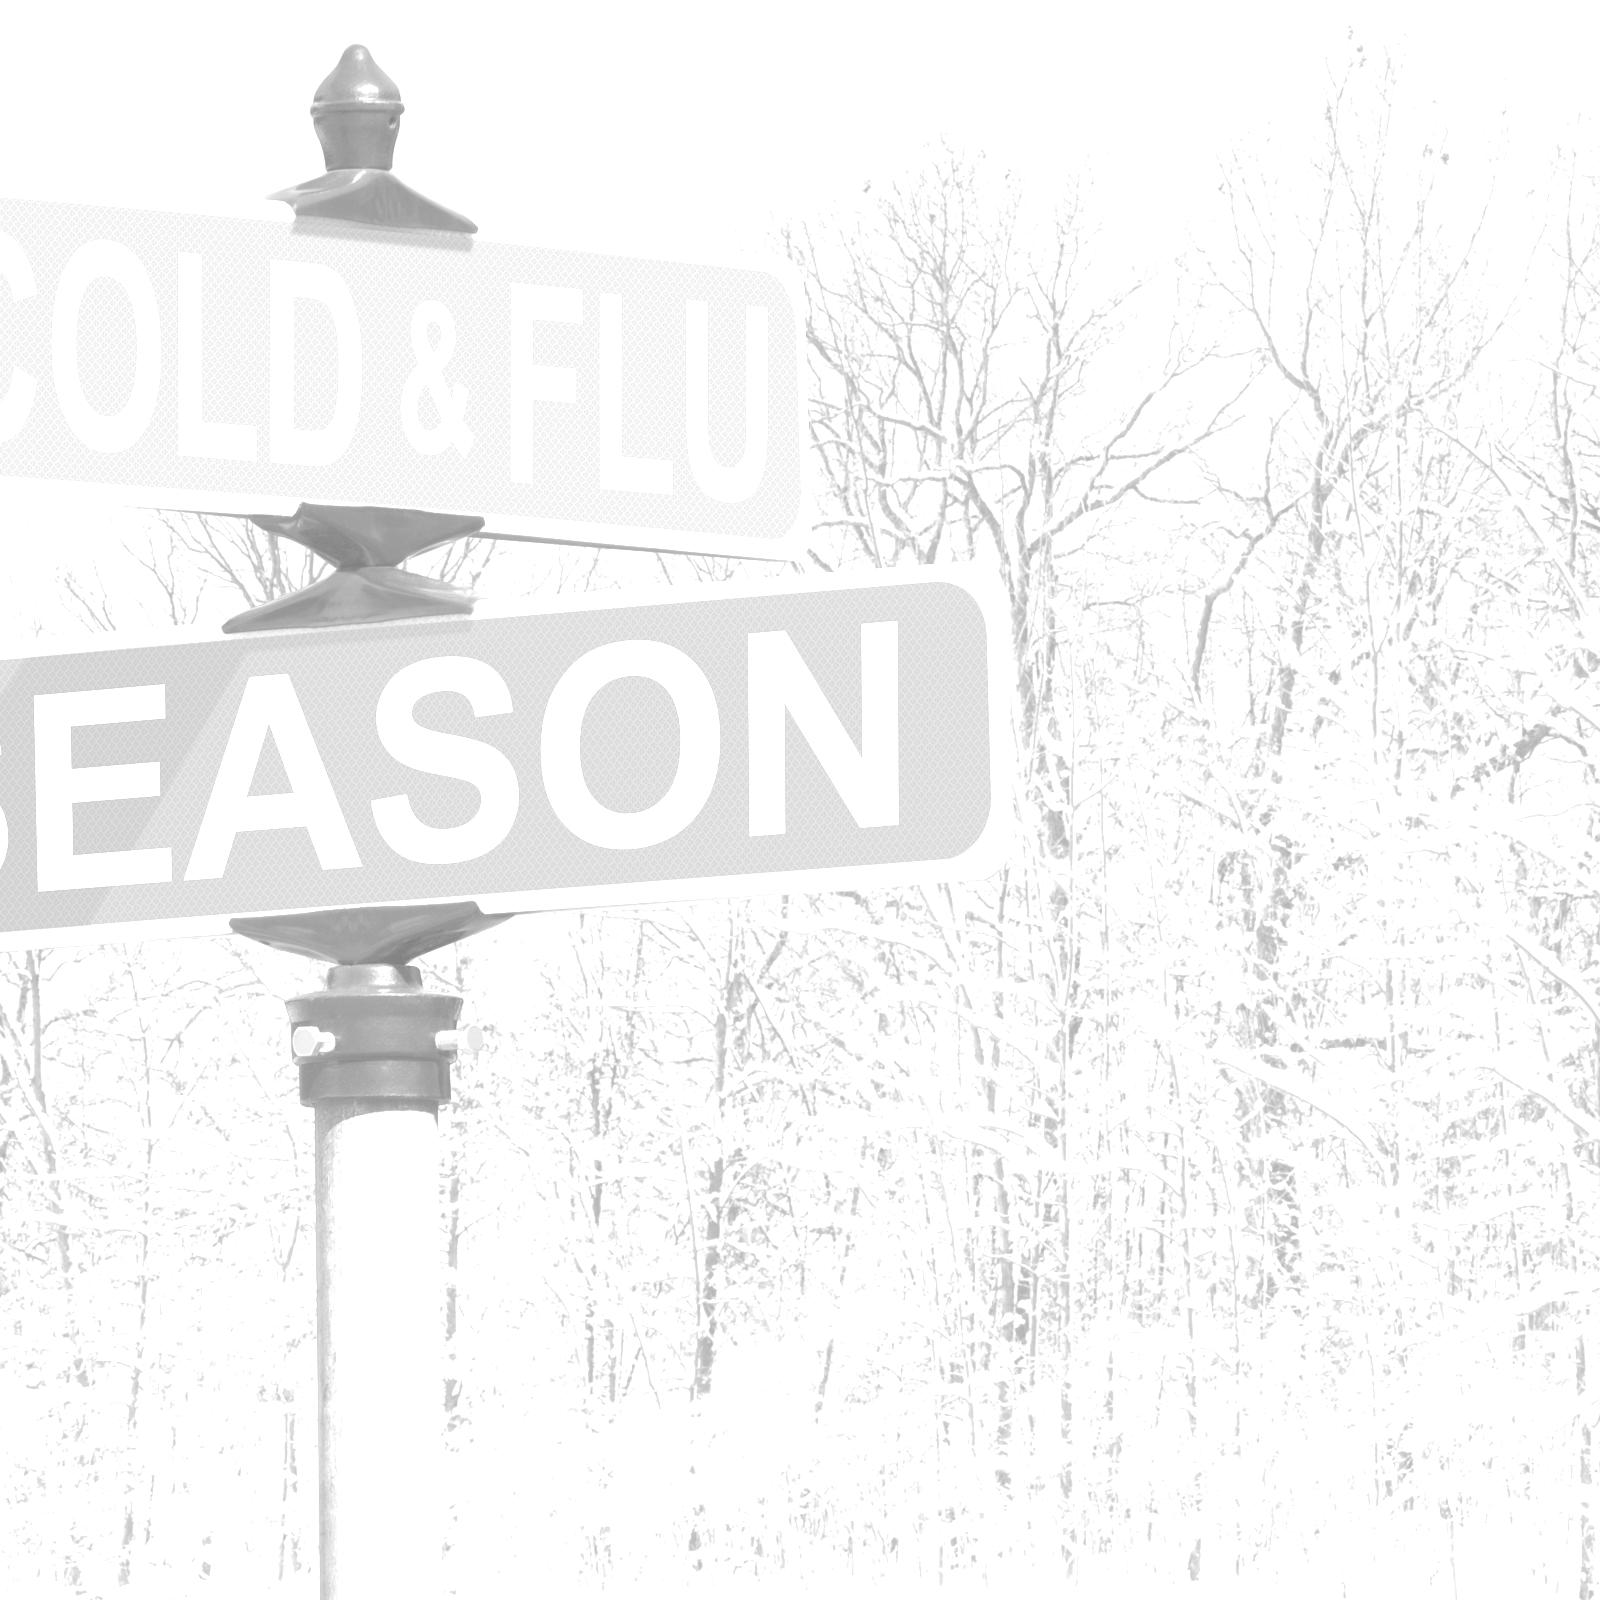 HAFFLPUFF project image, street signs that read cold & flu season